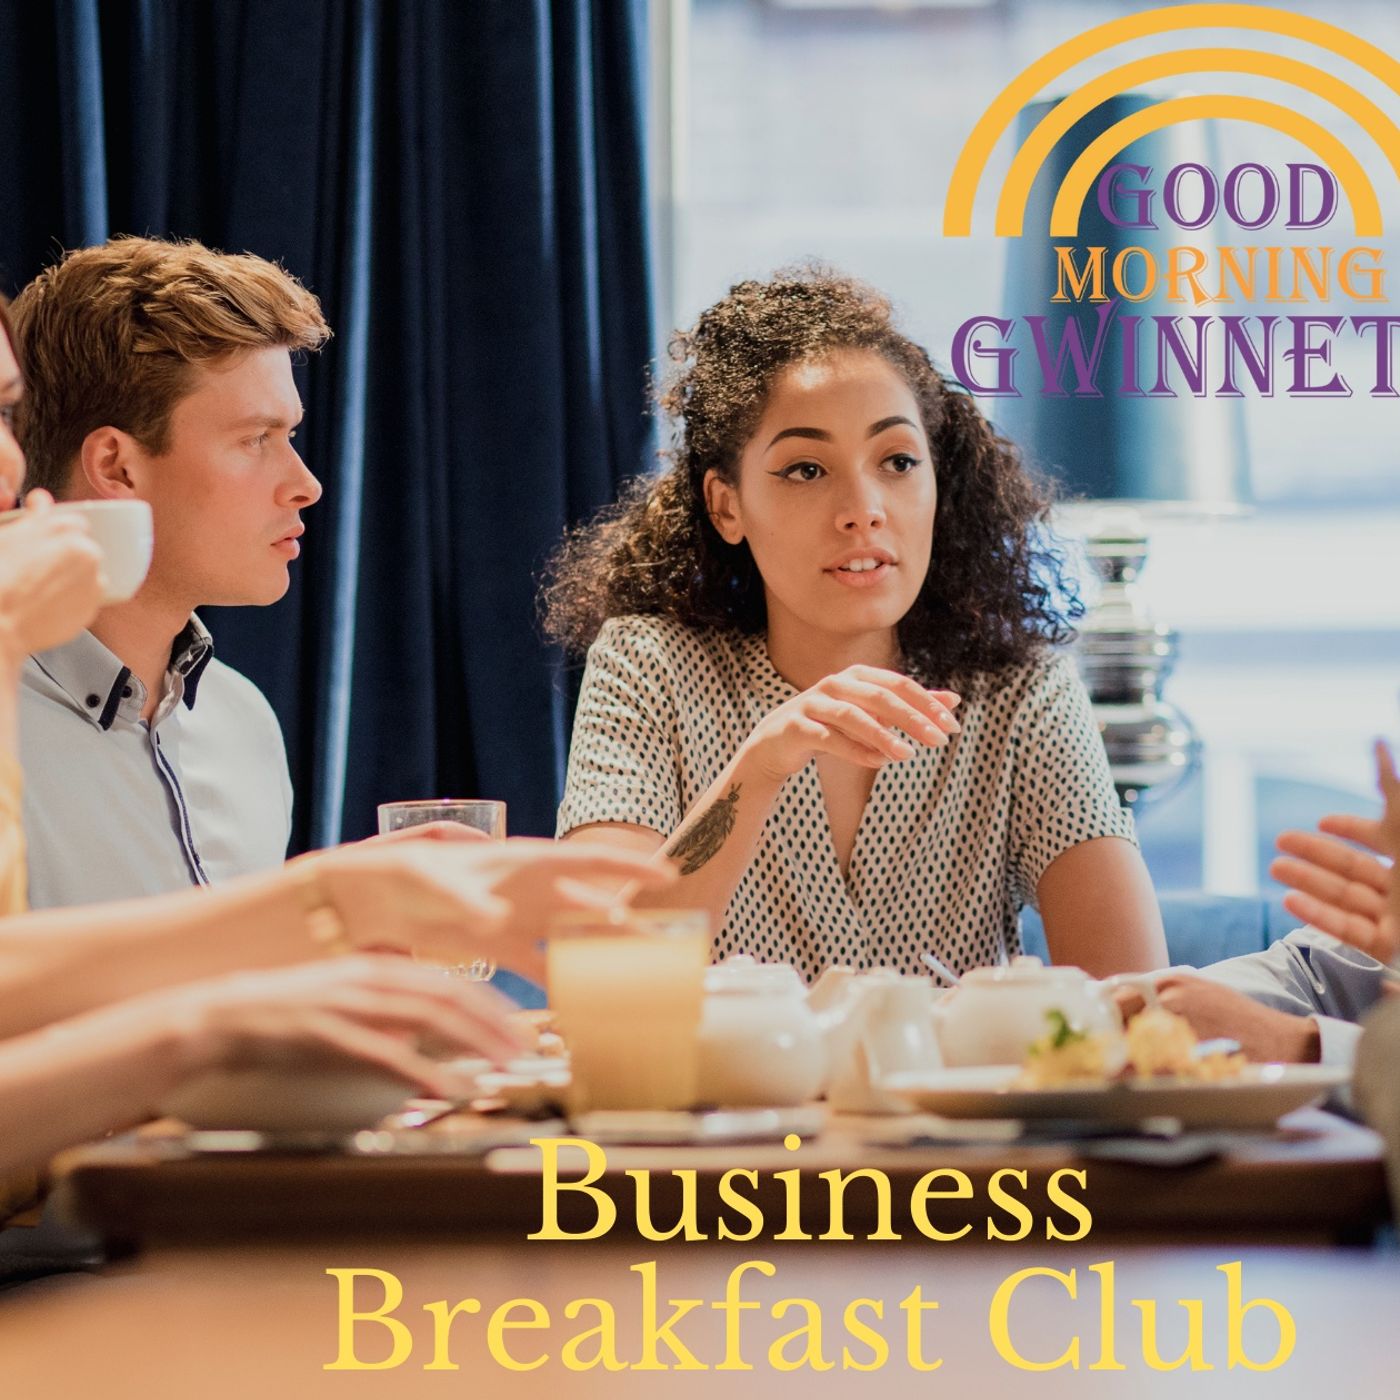 Gwinnett Business Breakfast Club Meetup Tomorrow